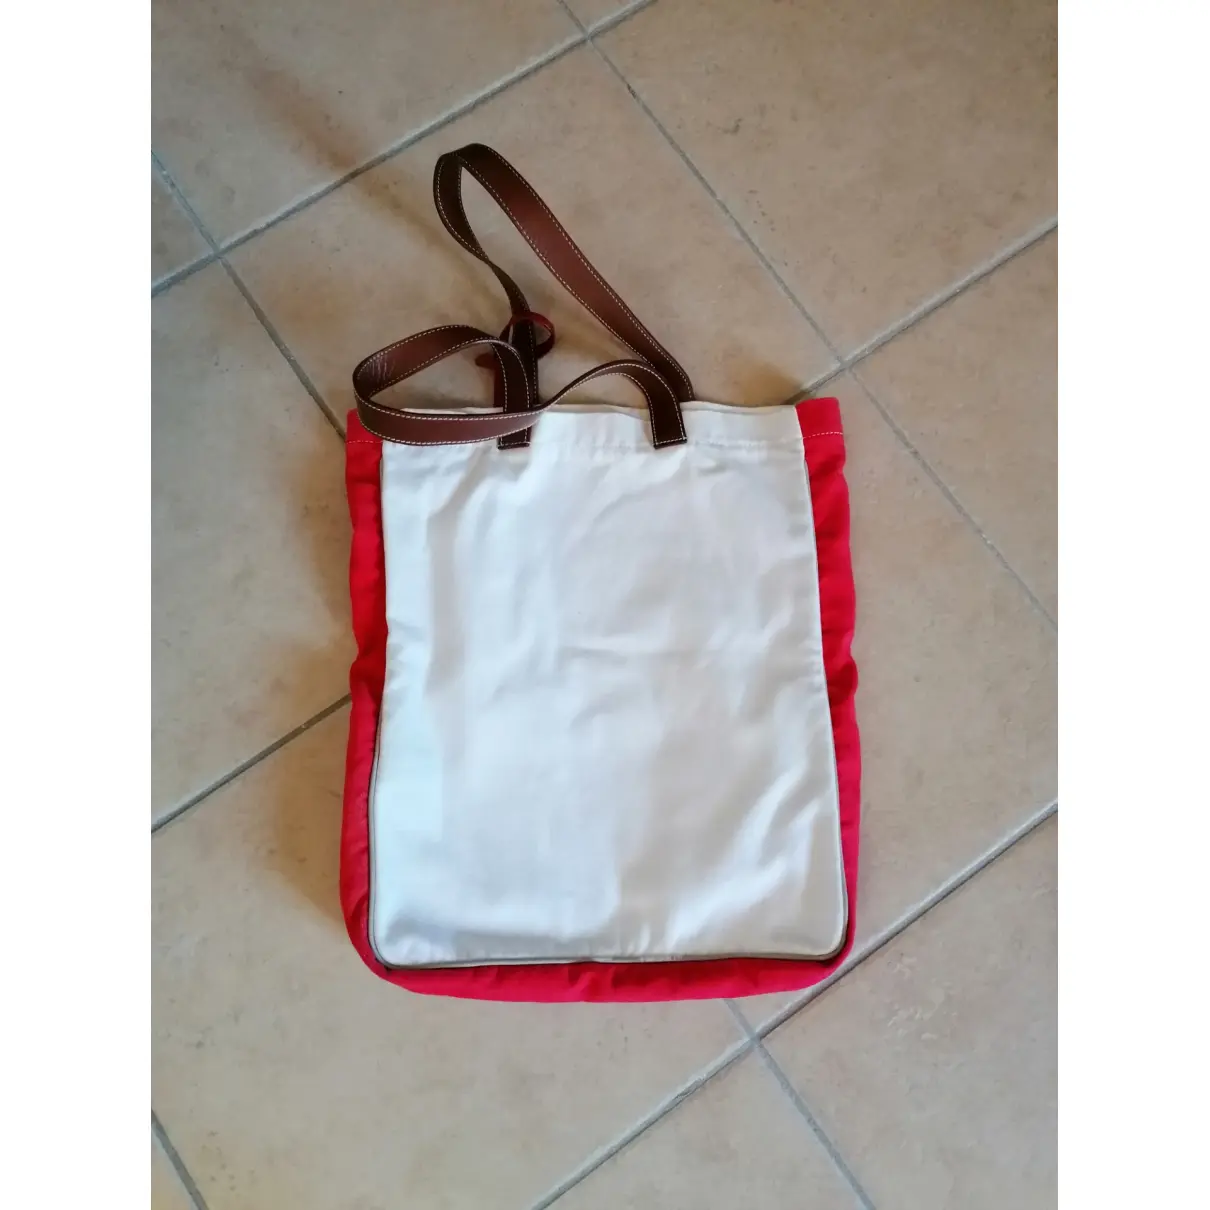 Buy Pollini Handbag online